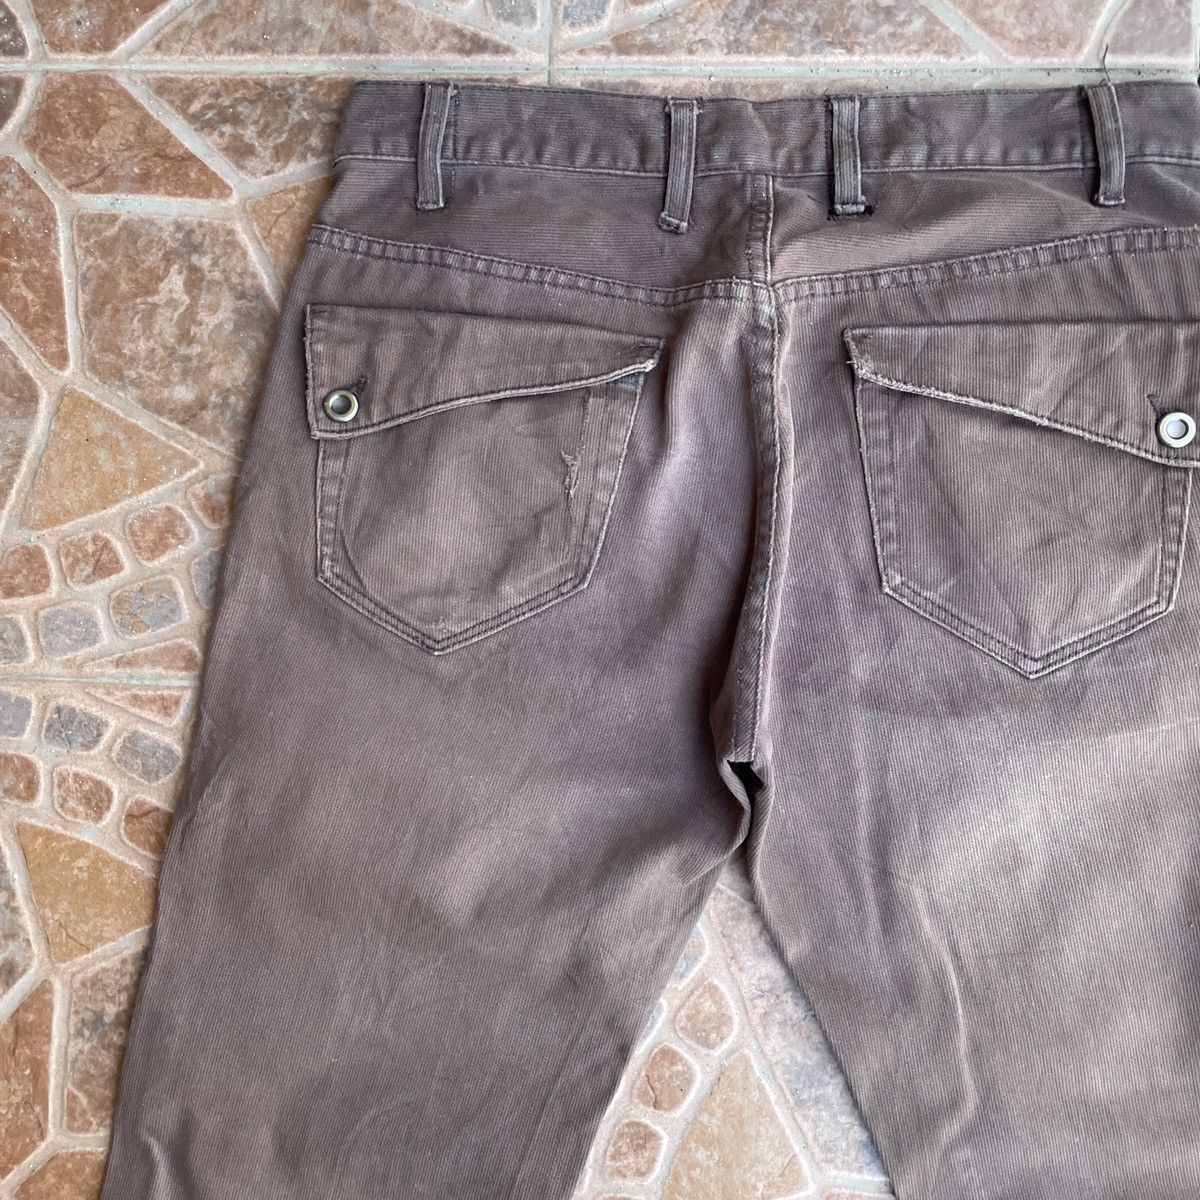 Beams Plus Vintage Beams Corduroy Distressed Casual Pants Size US 32 / EU 48 - 9 Thumbnail